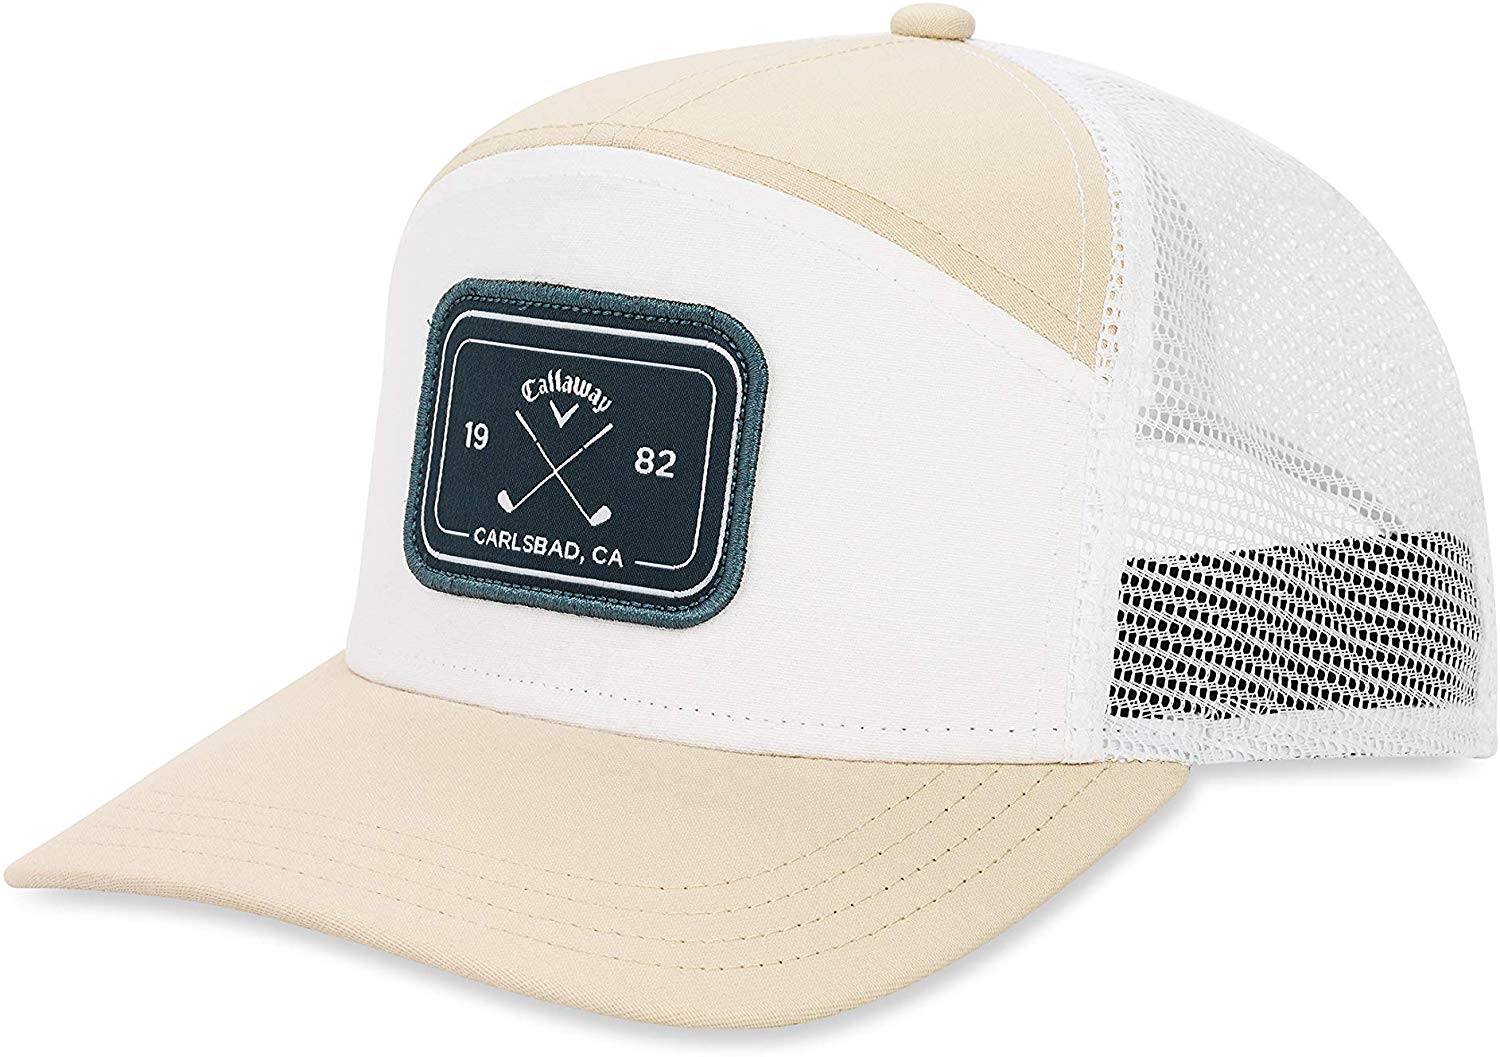 Mens Callaway 2019 6 Panel Trucker Golf Caps